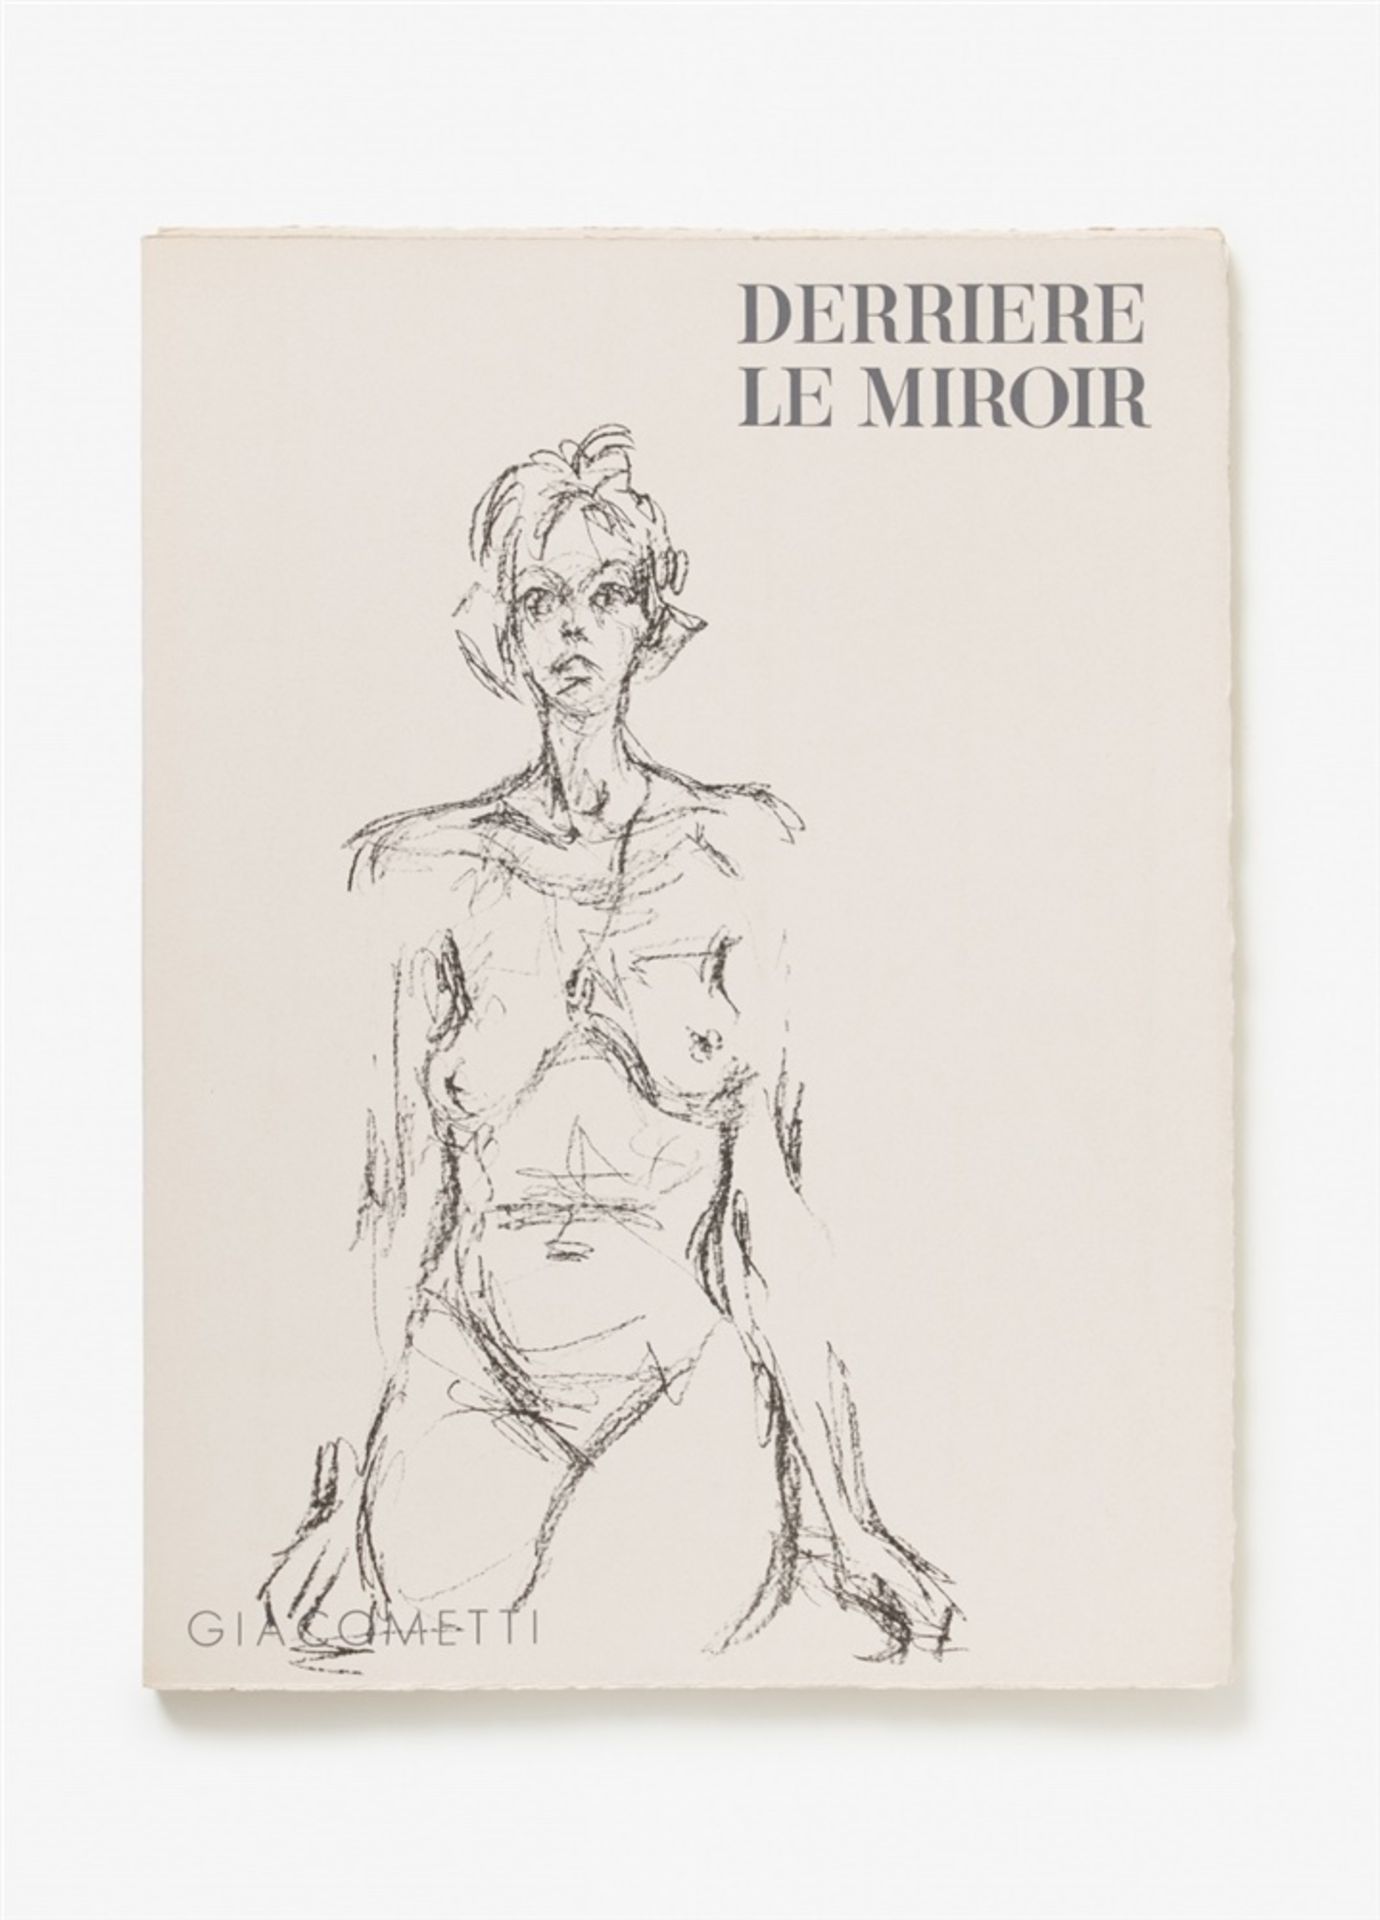 GIACOMETTI, ALBERTO Derrière le miroir. N°. 127. Paris: Maeght 1961. 38 x 28,4 cm. Mit 14